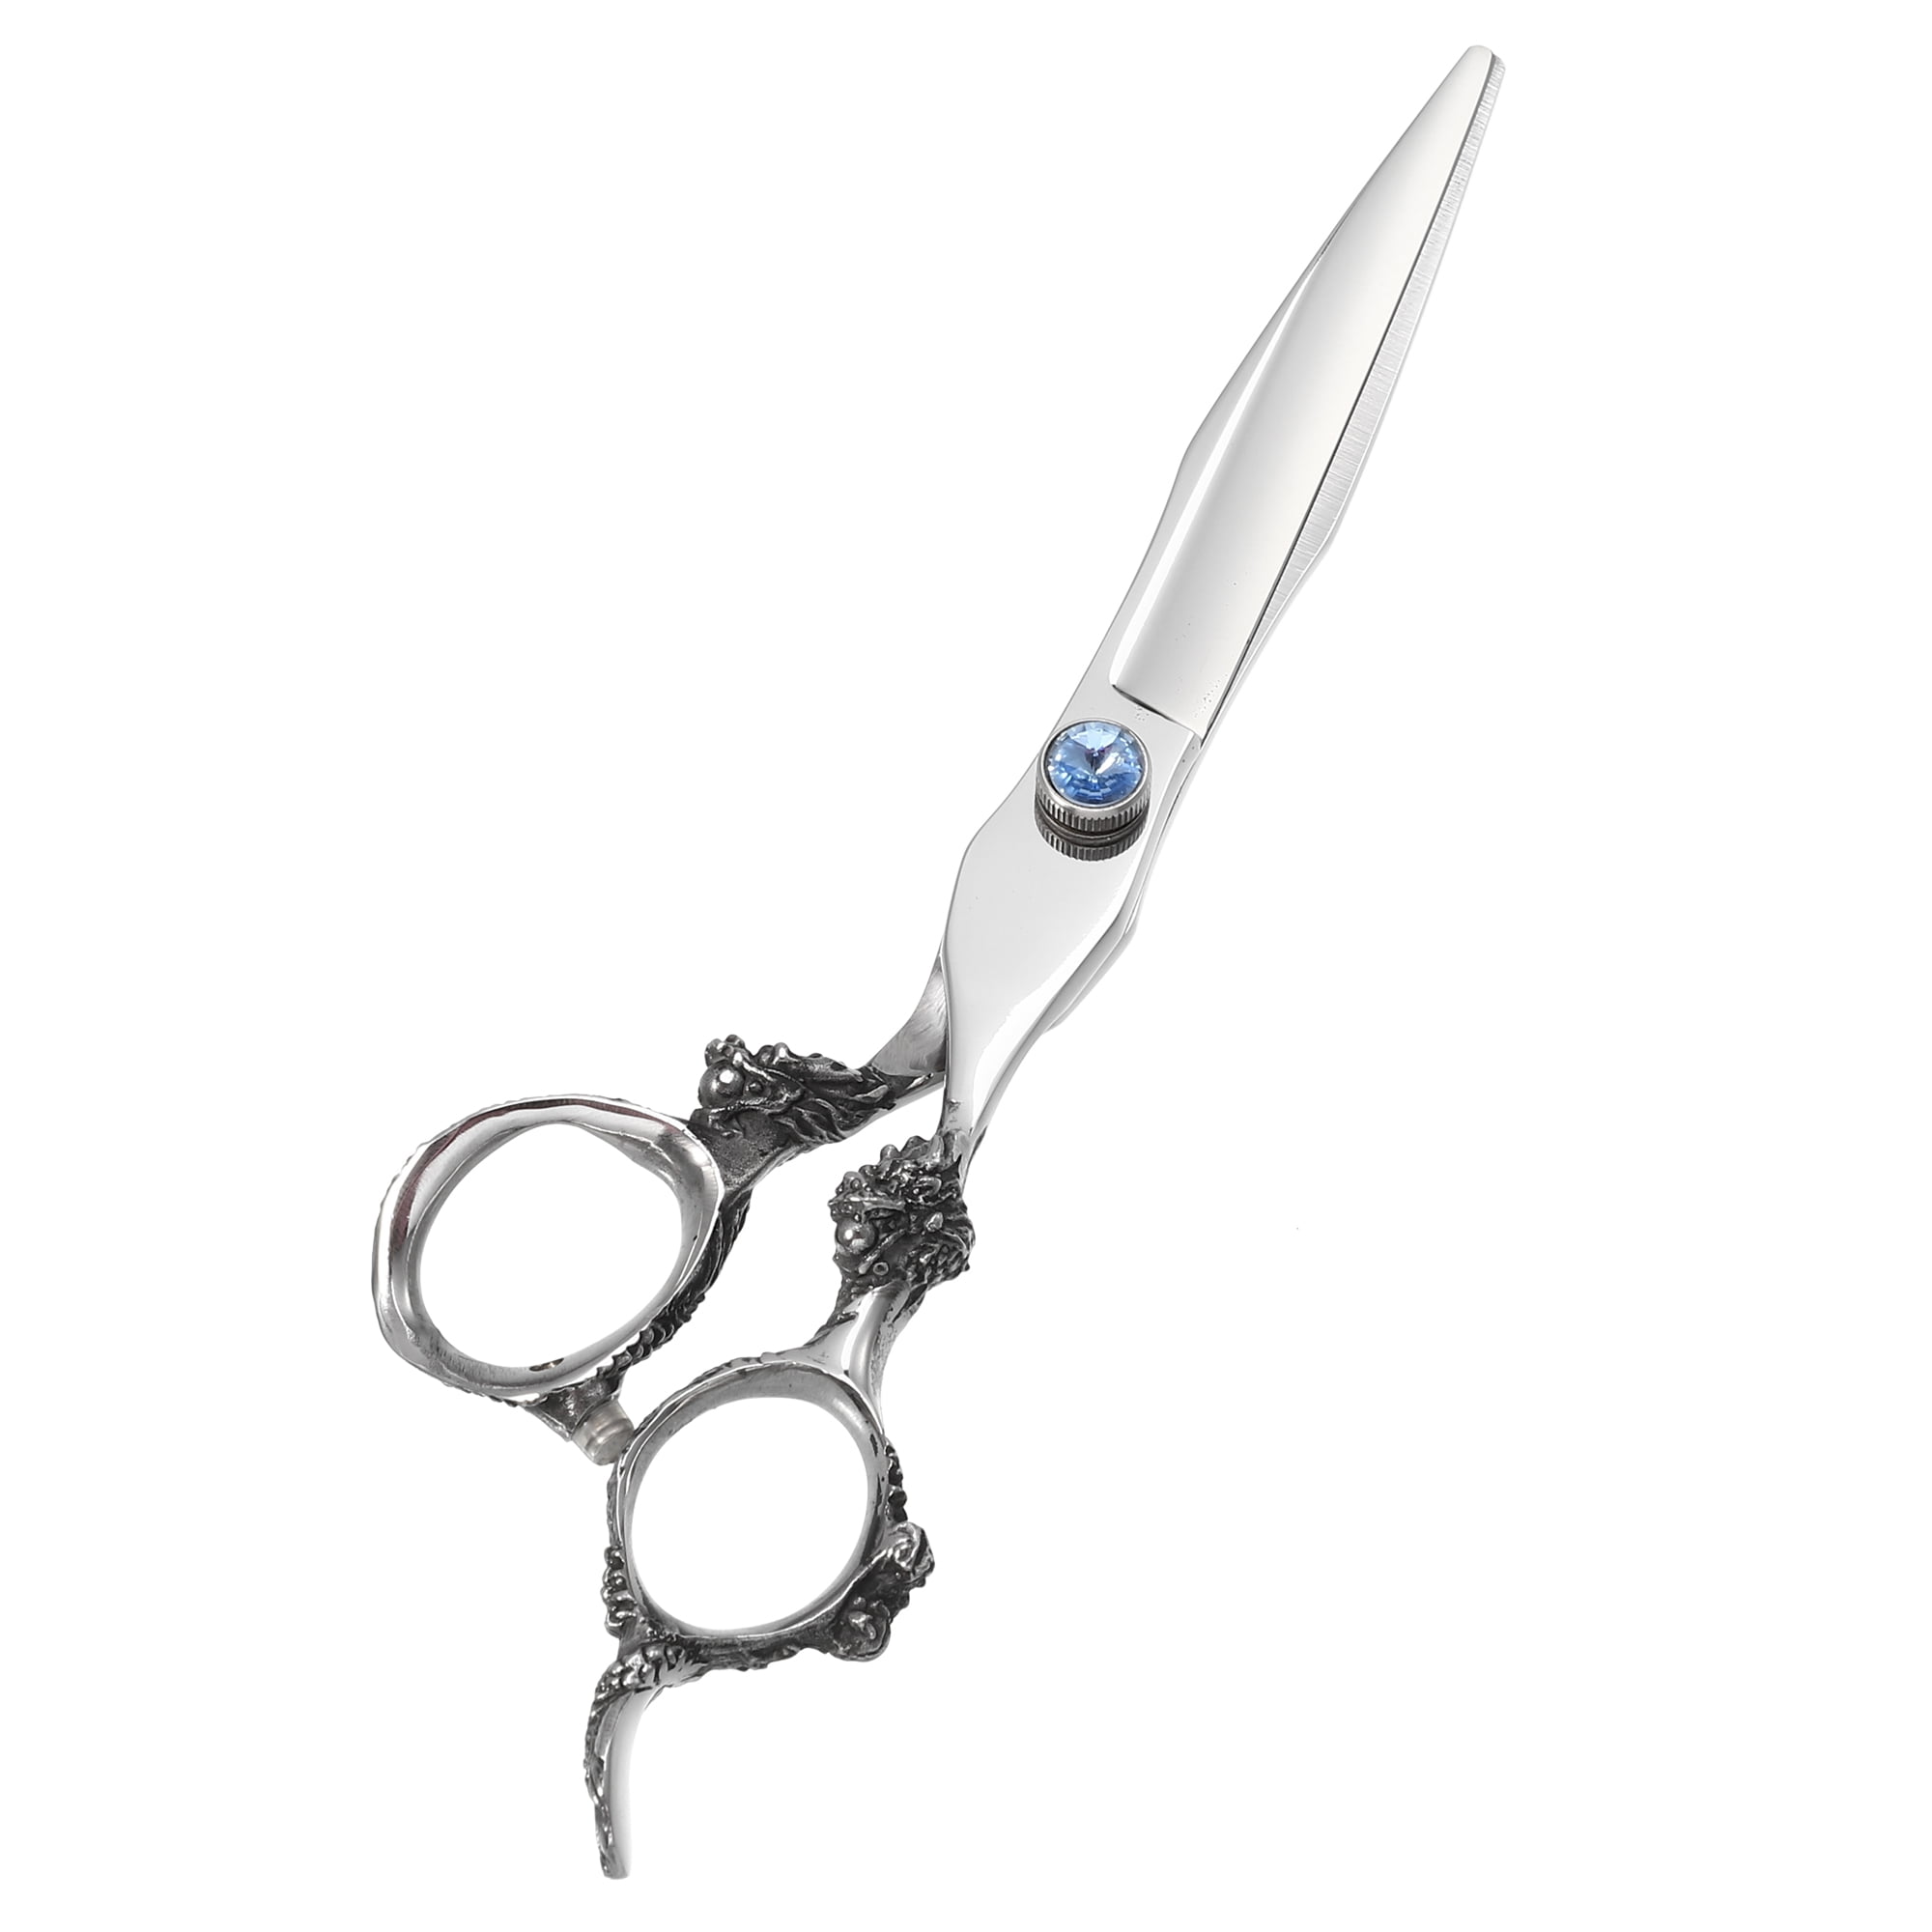 Hair scissors stainless steel